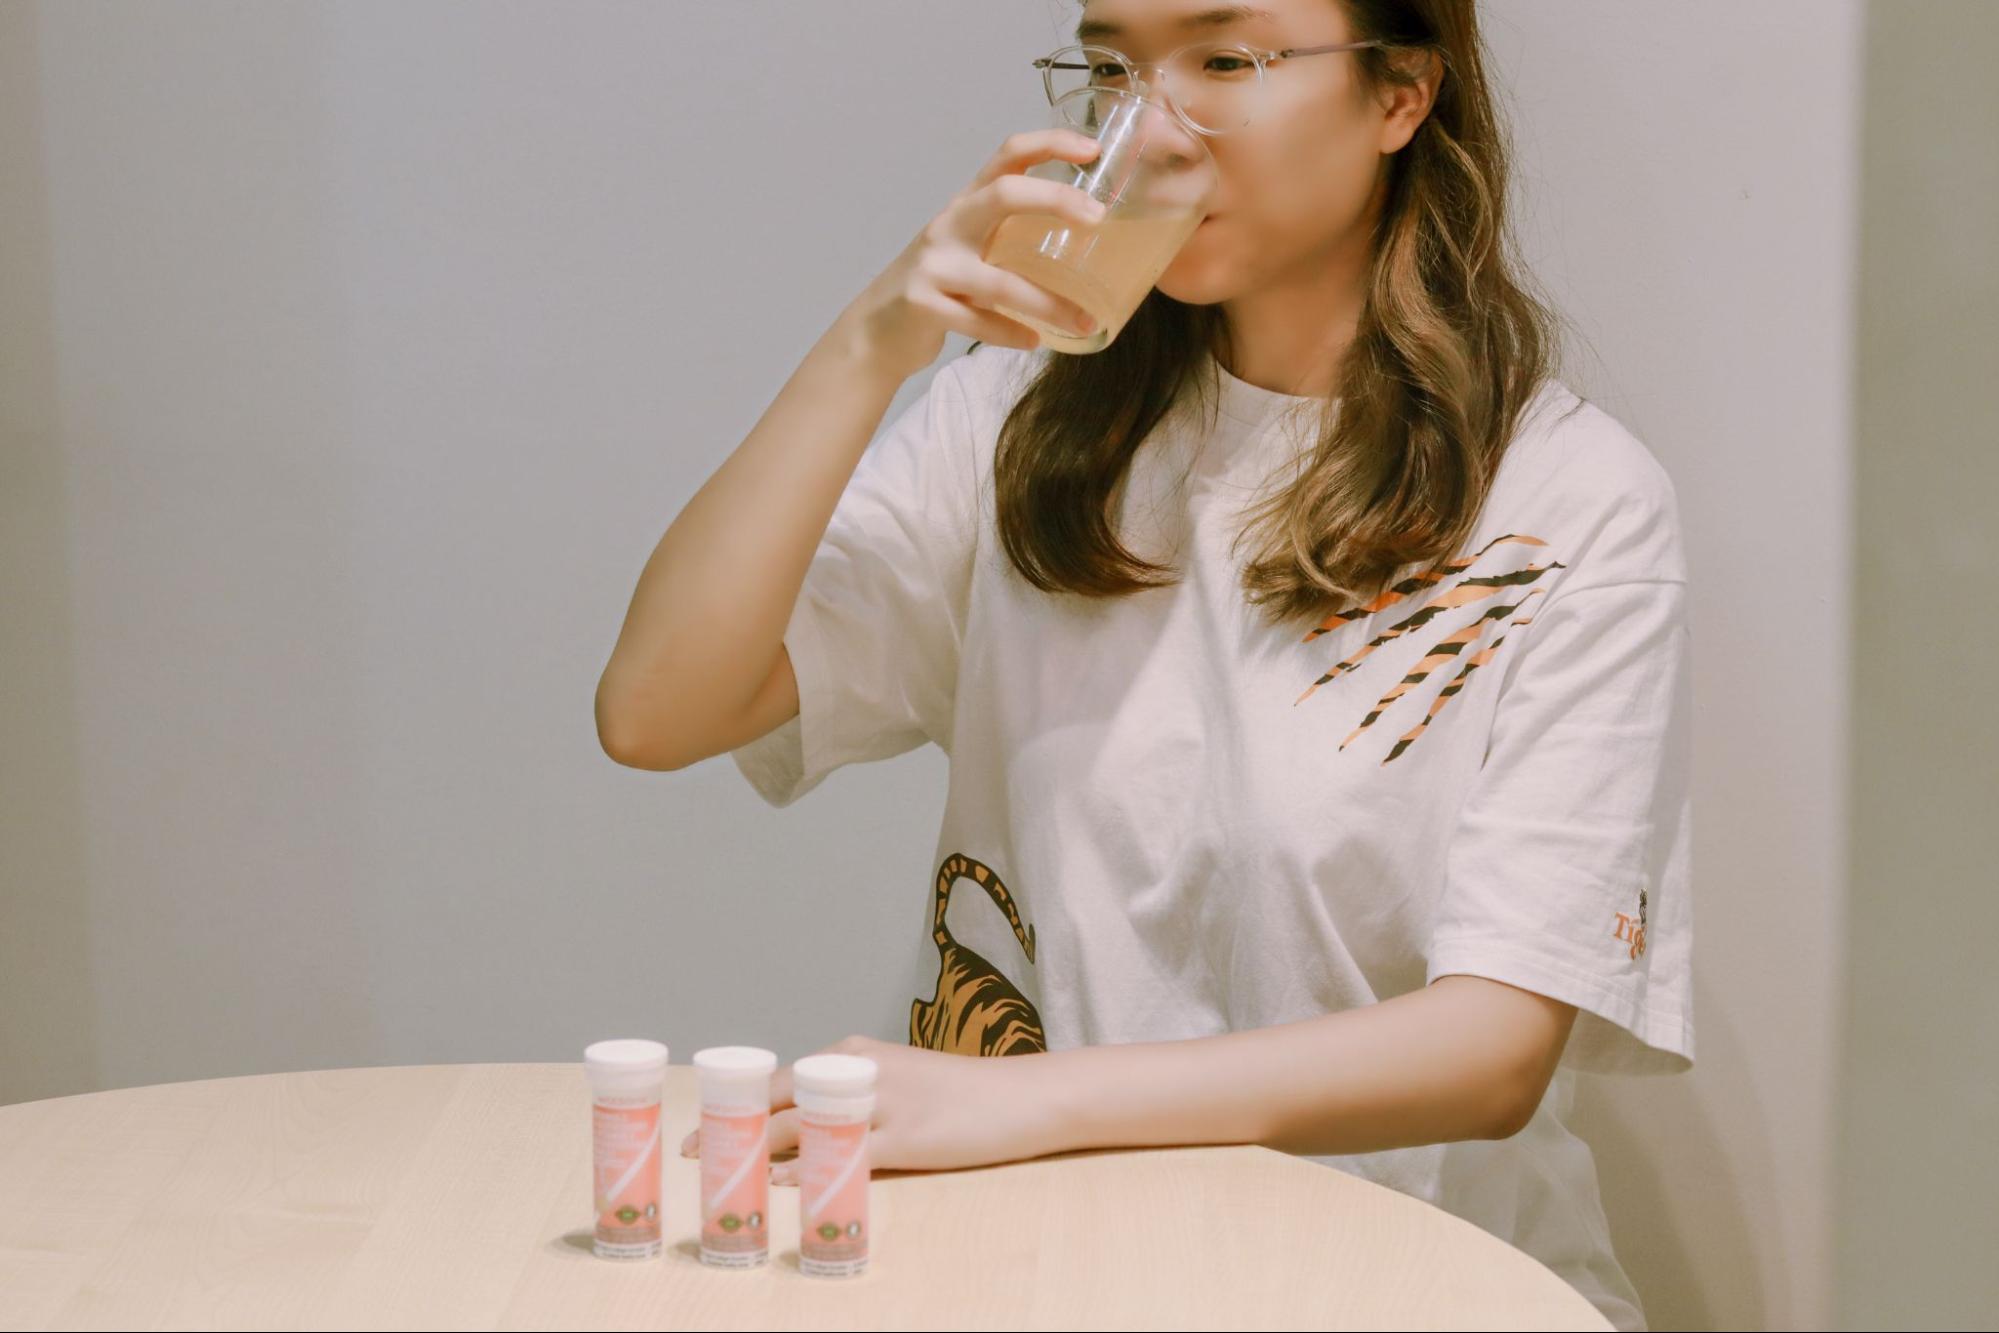 Asian woman consuming vitamins from watsons